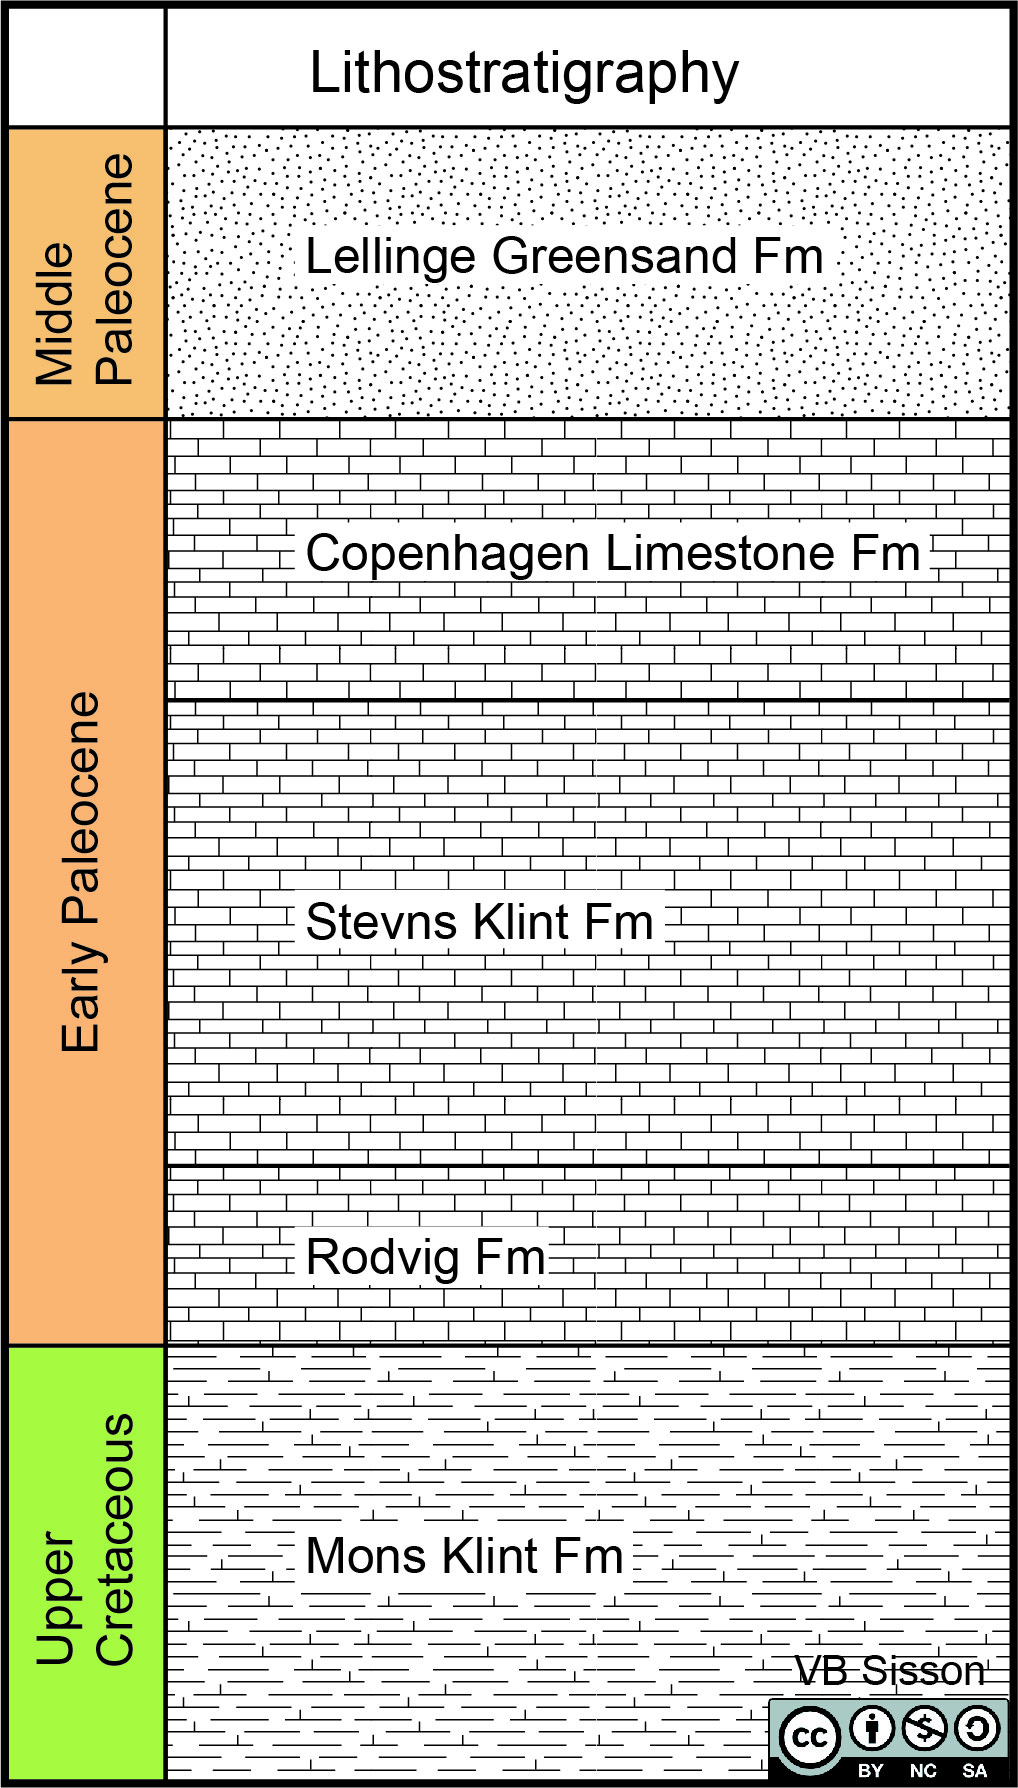 Stratigraphic column for Stevns Klint